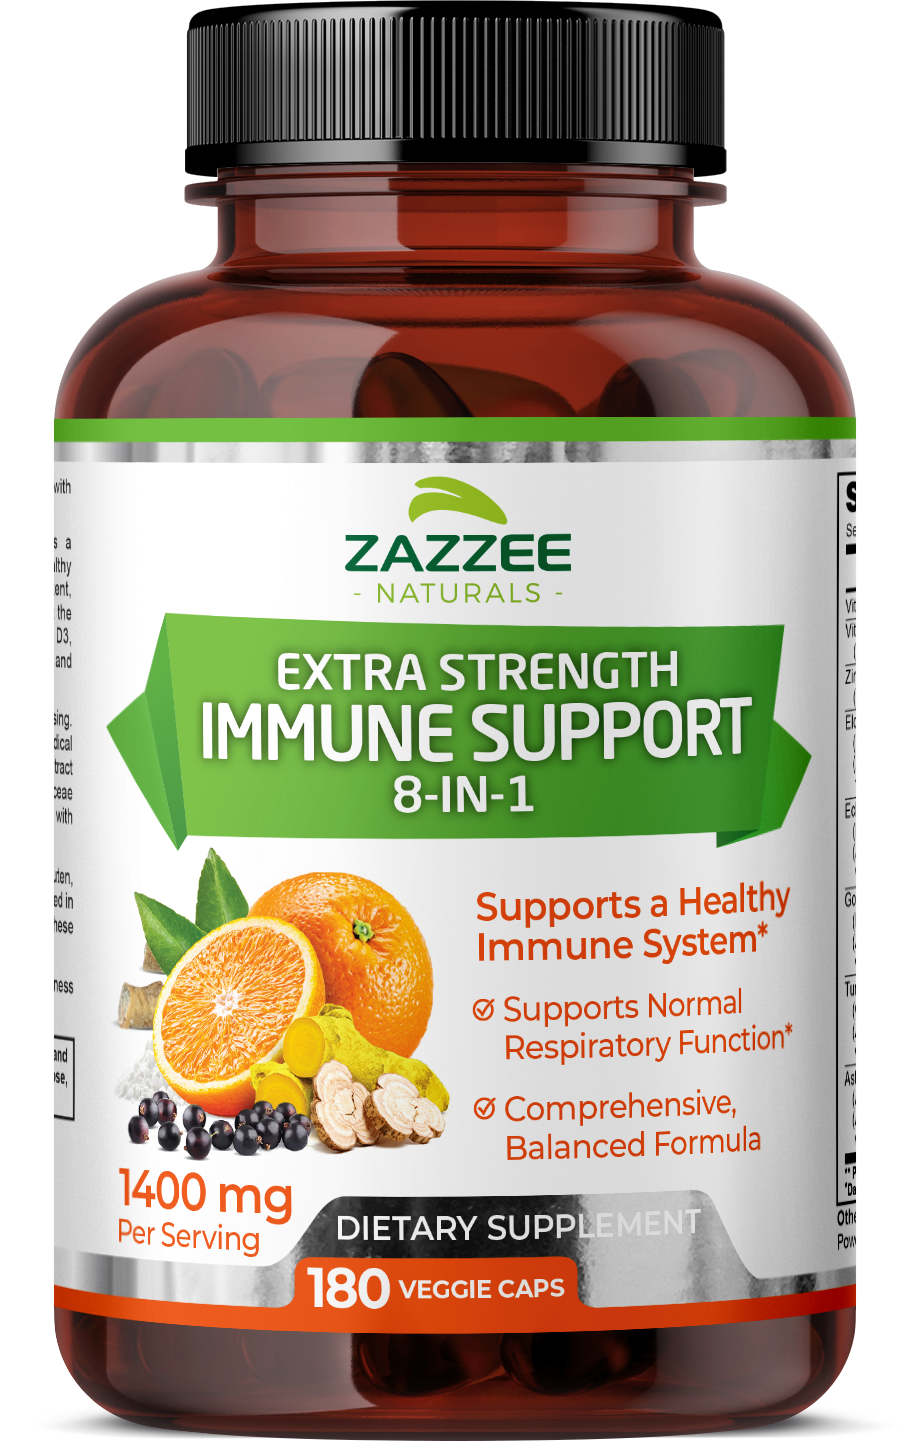 8-in-1 Immune Support